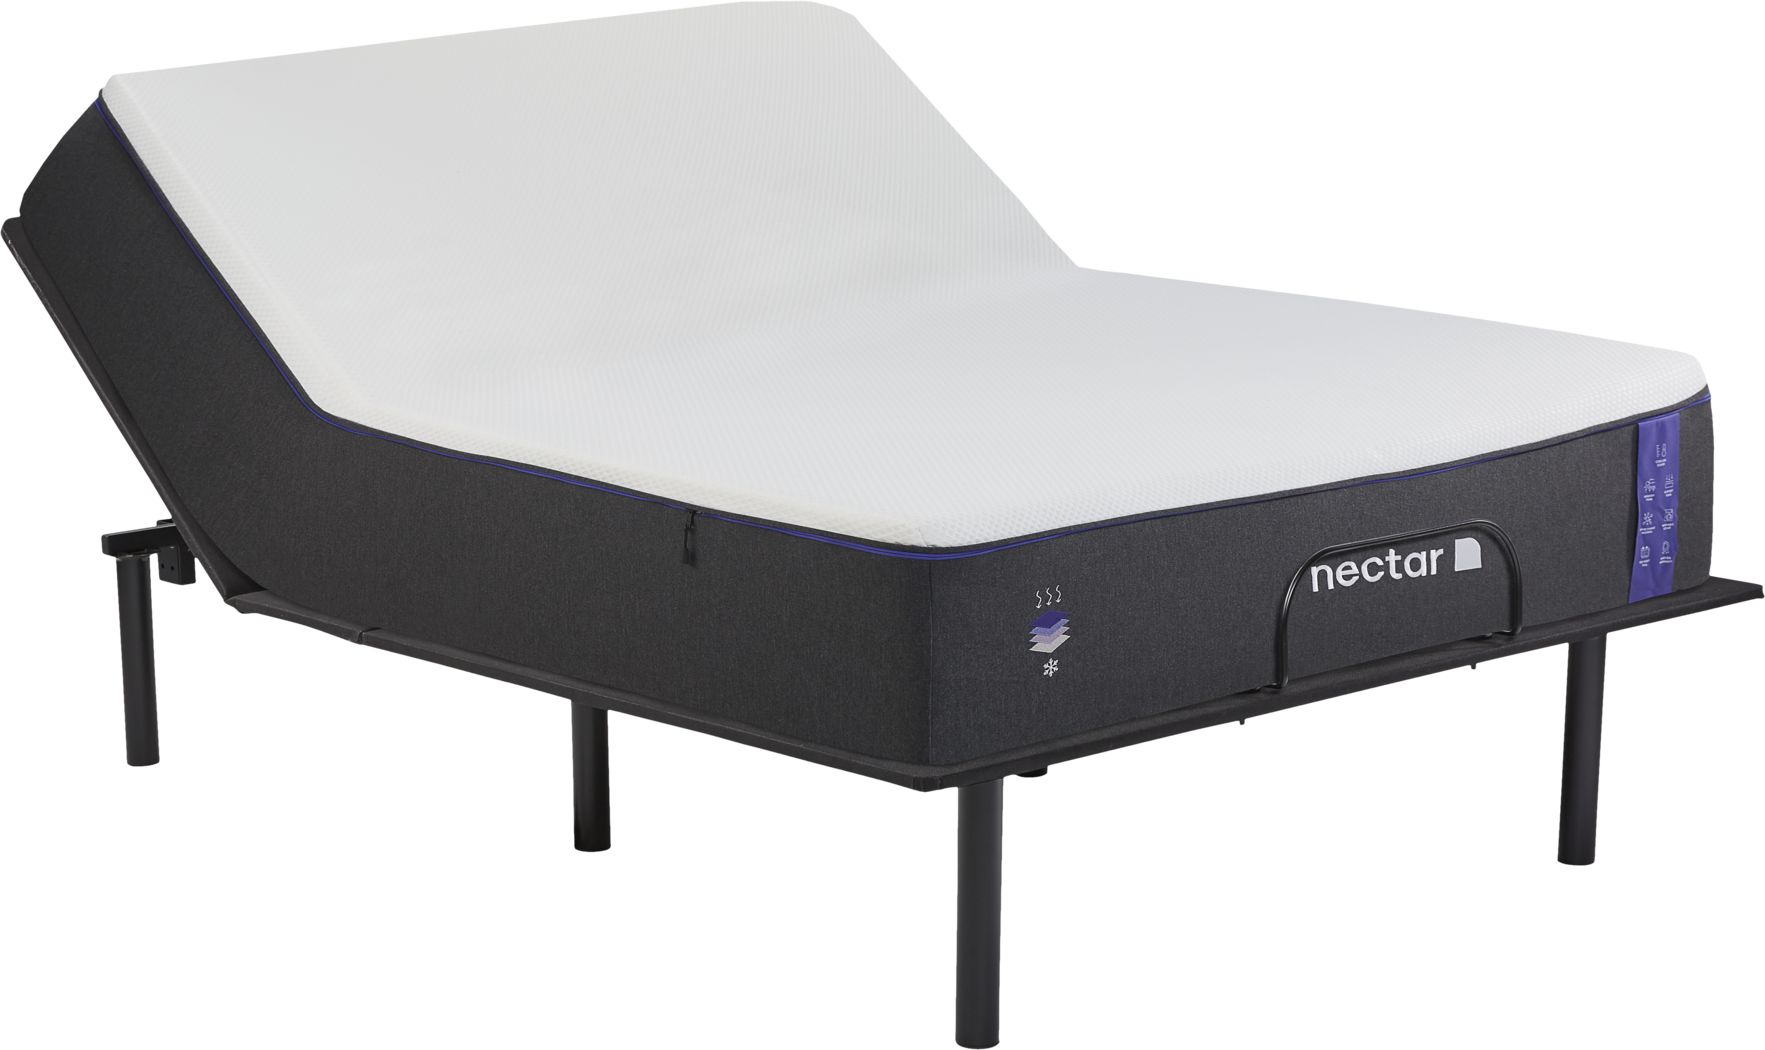 nectar adjustable mattress reviews